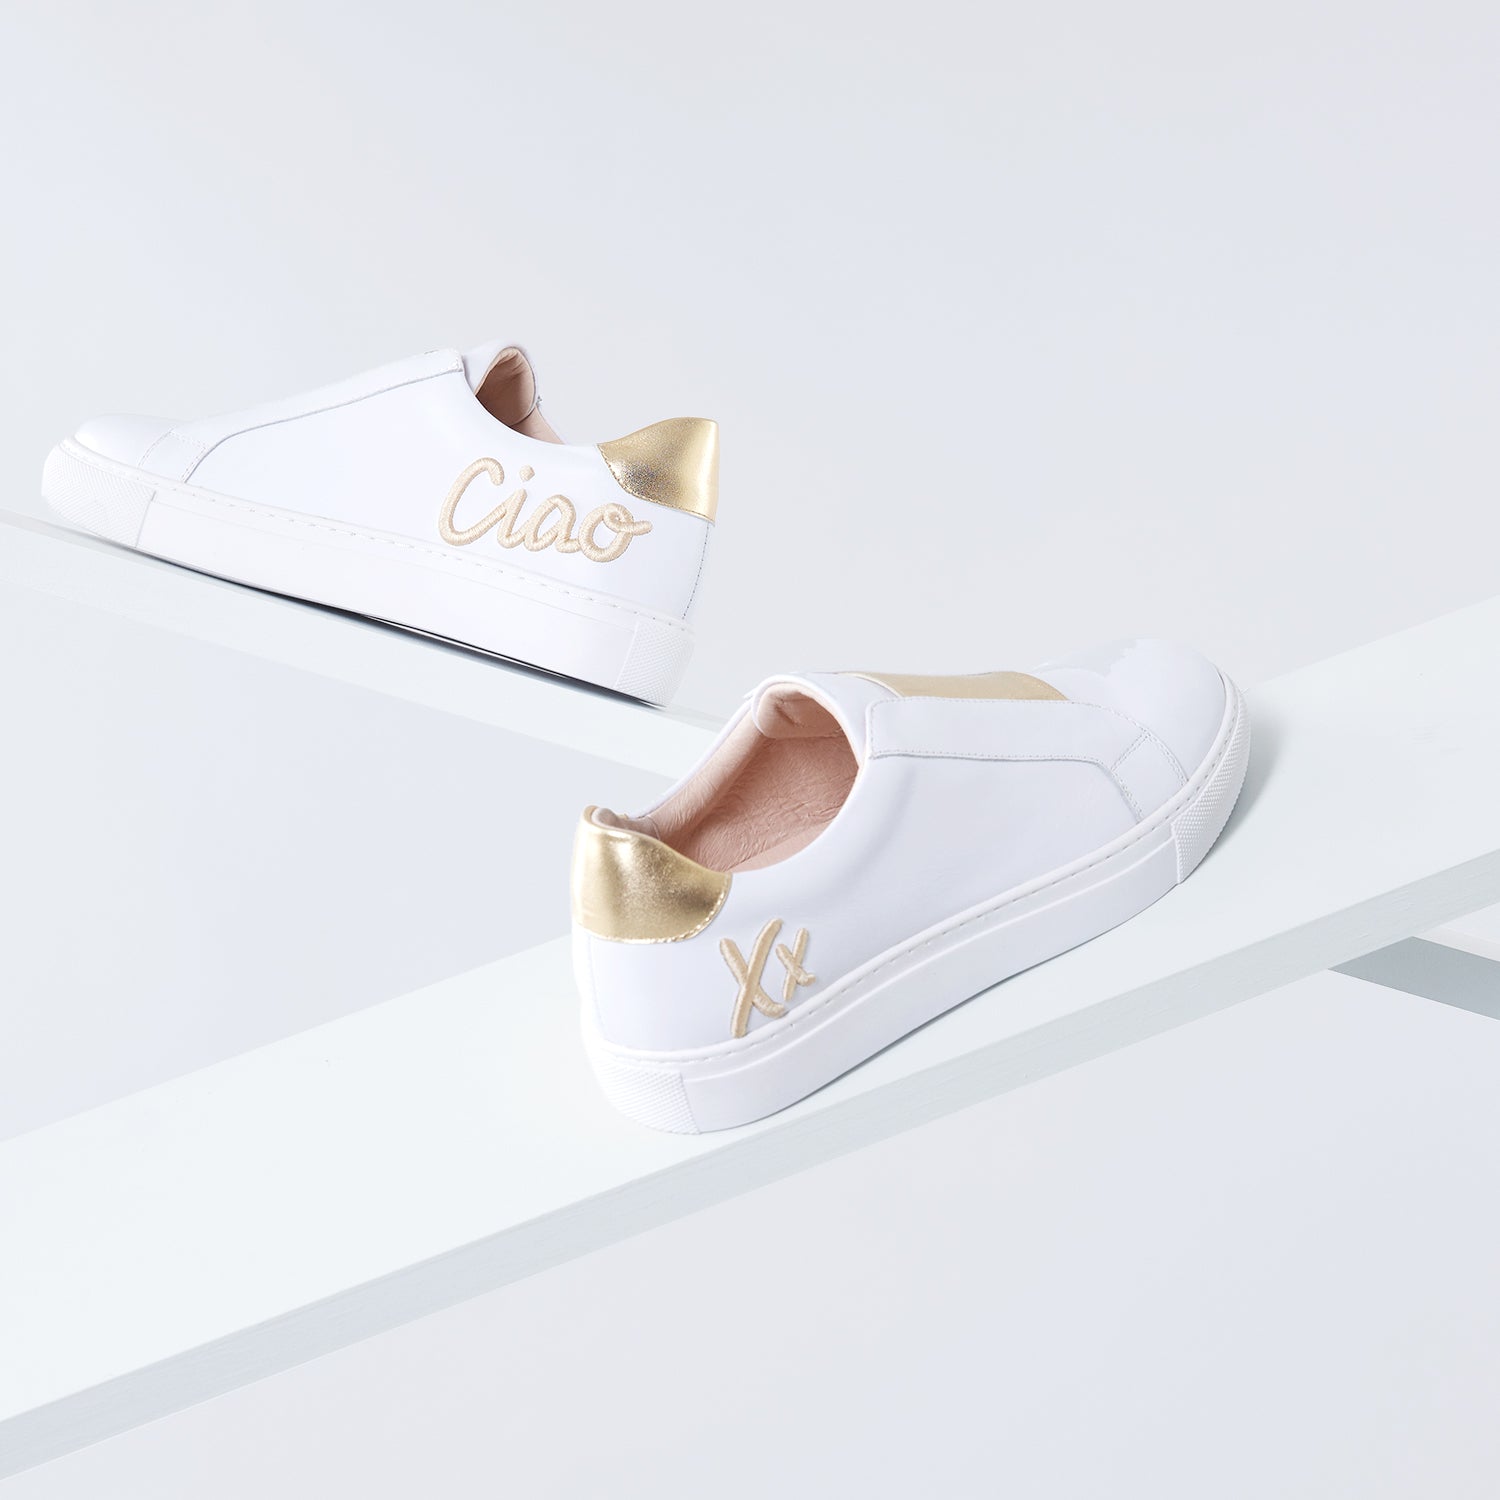 Ciao Xx Sneaker | White/Gold